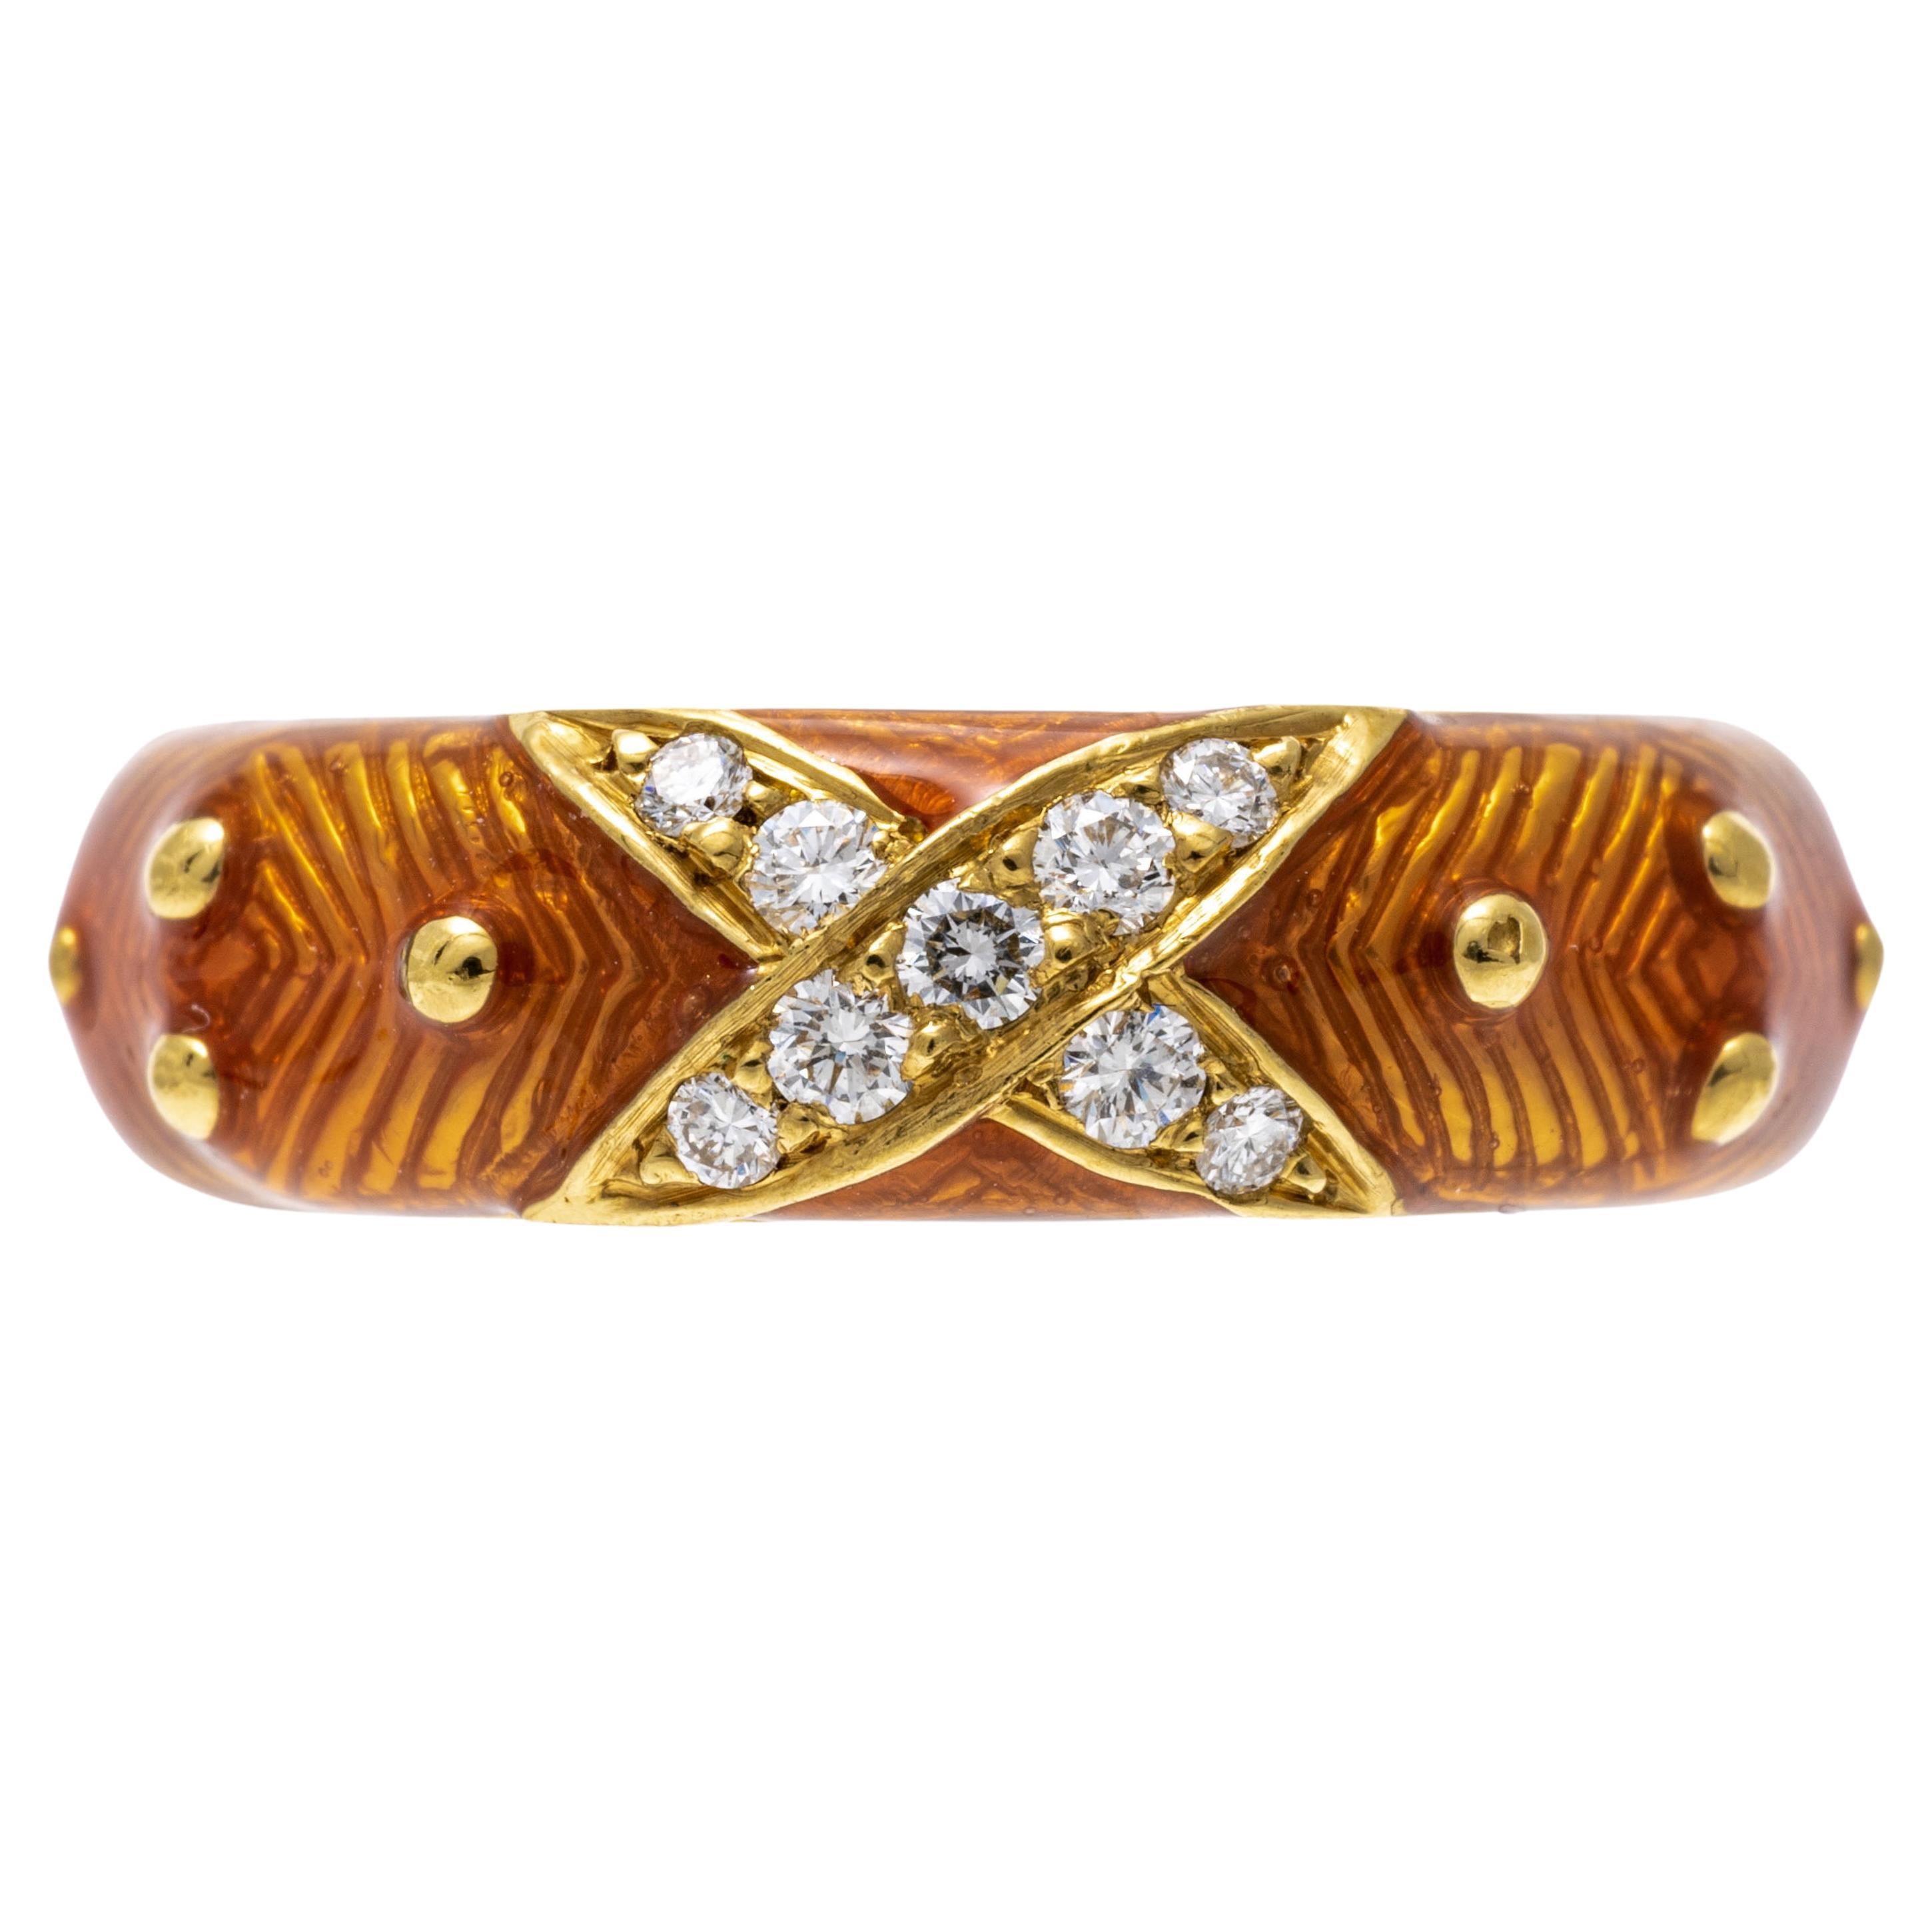 Hidalgo 18k Yellow Gold Peach Enamel and Diamond "x" Band Ring